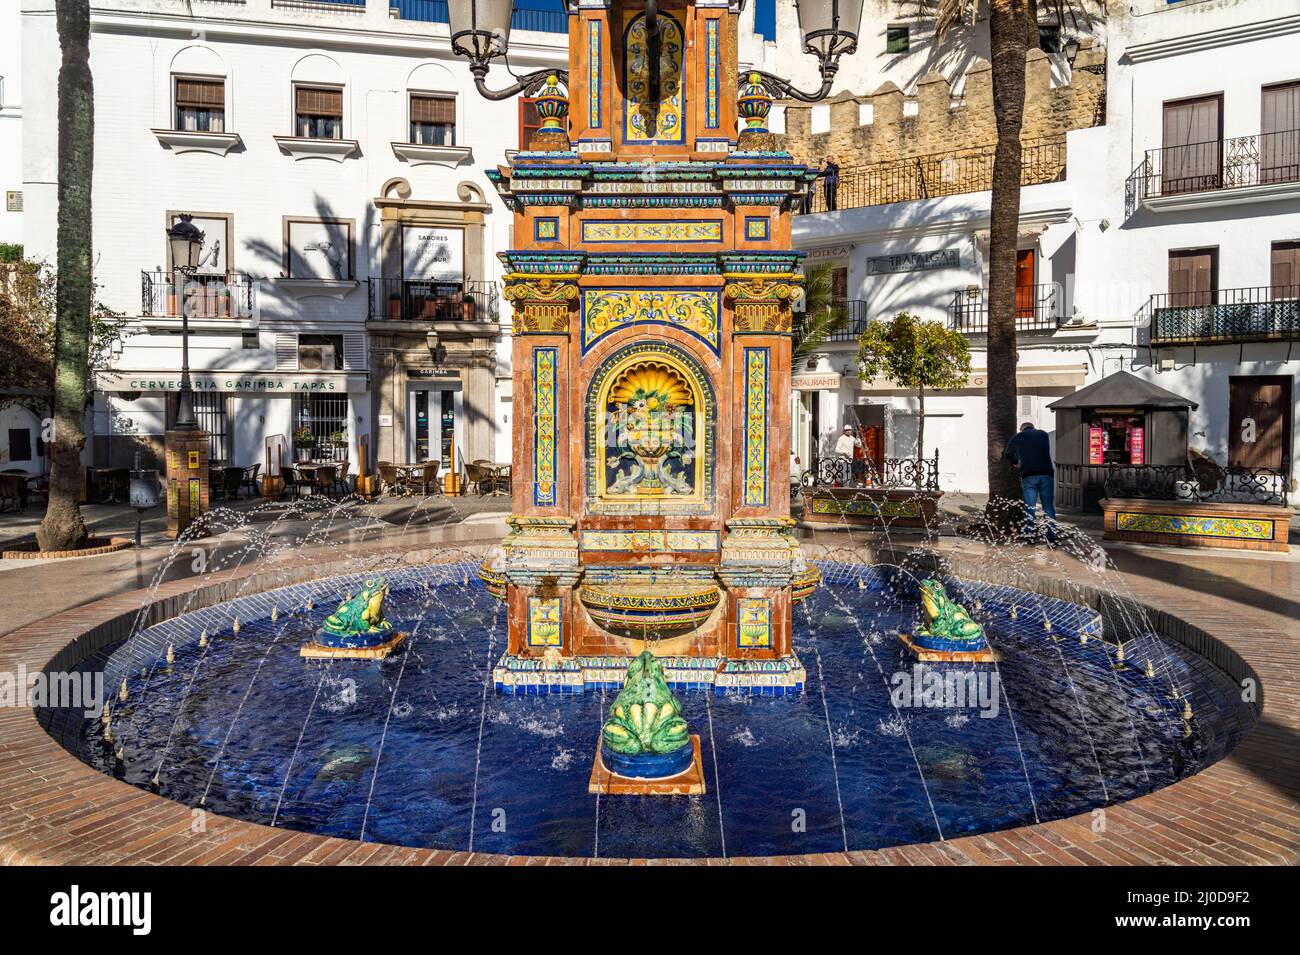 Brunnen am Platz Plaza España, Vejer de la Frontera, Andalusien, Spanien | Brunnen am Plaza España, Vejer de la Frontera, Andalusien, Spanien Stockfoto